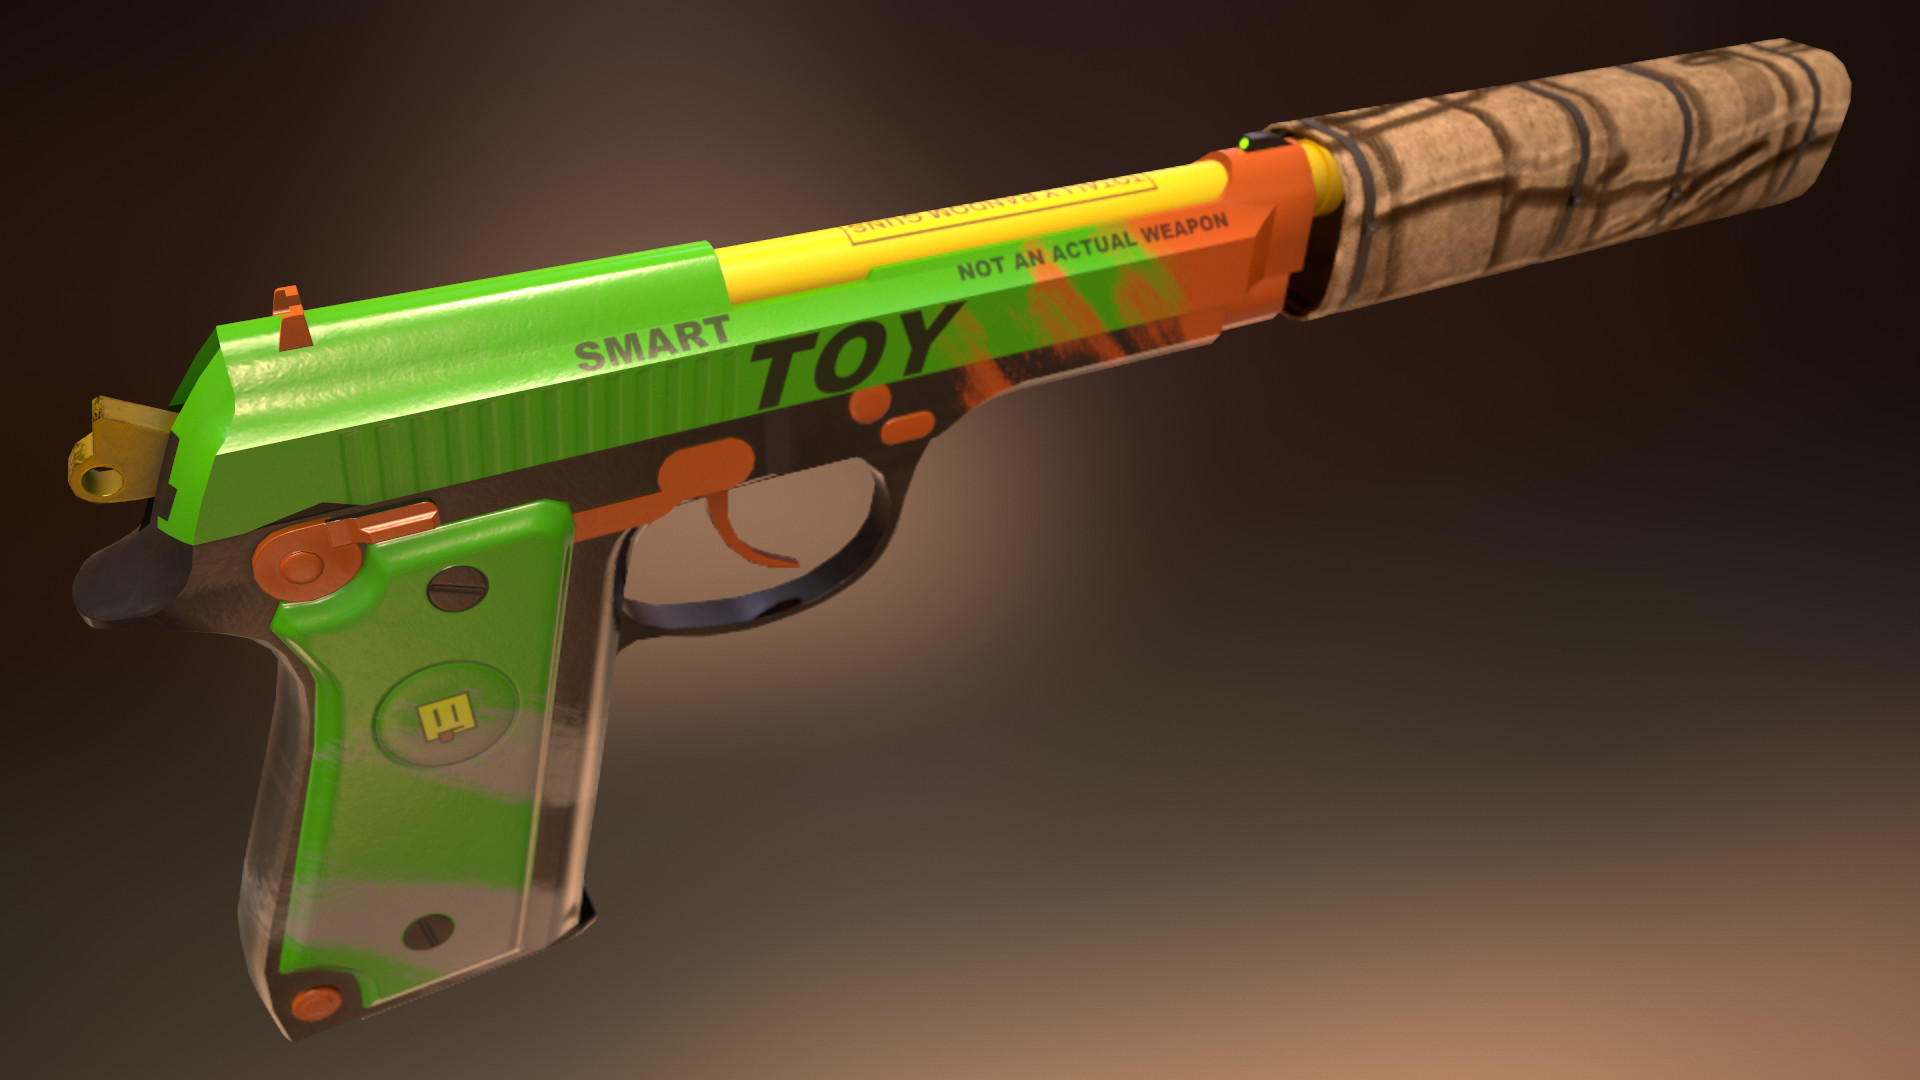 Rainbow Six Siege Caveira Weapon PRB92 Luison Cosplay Replica Handgun Prop  Buy